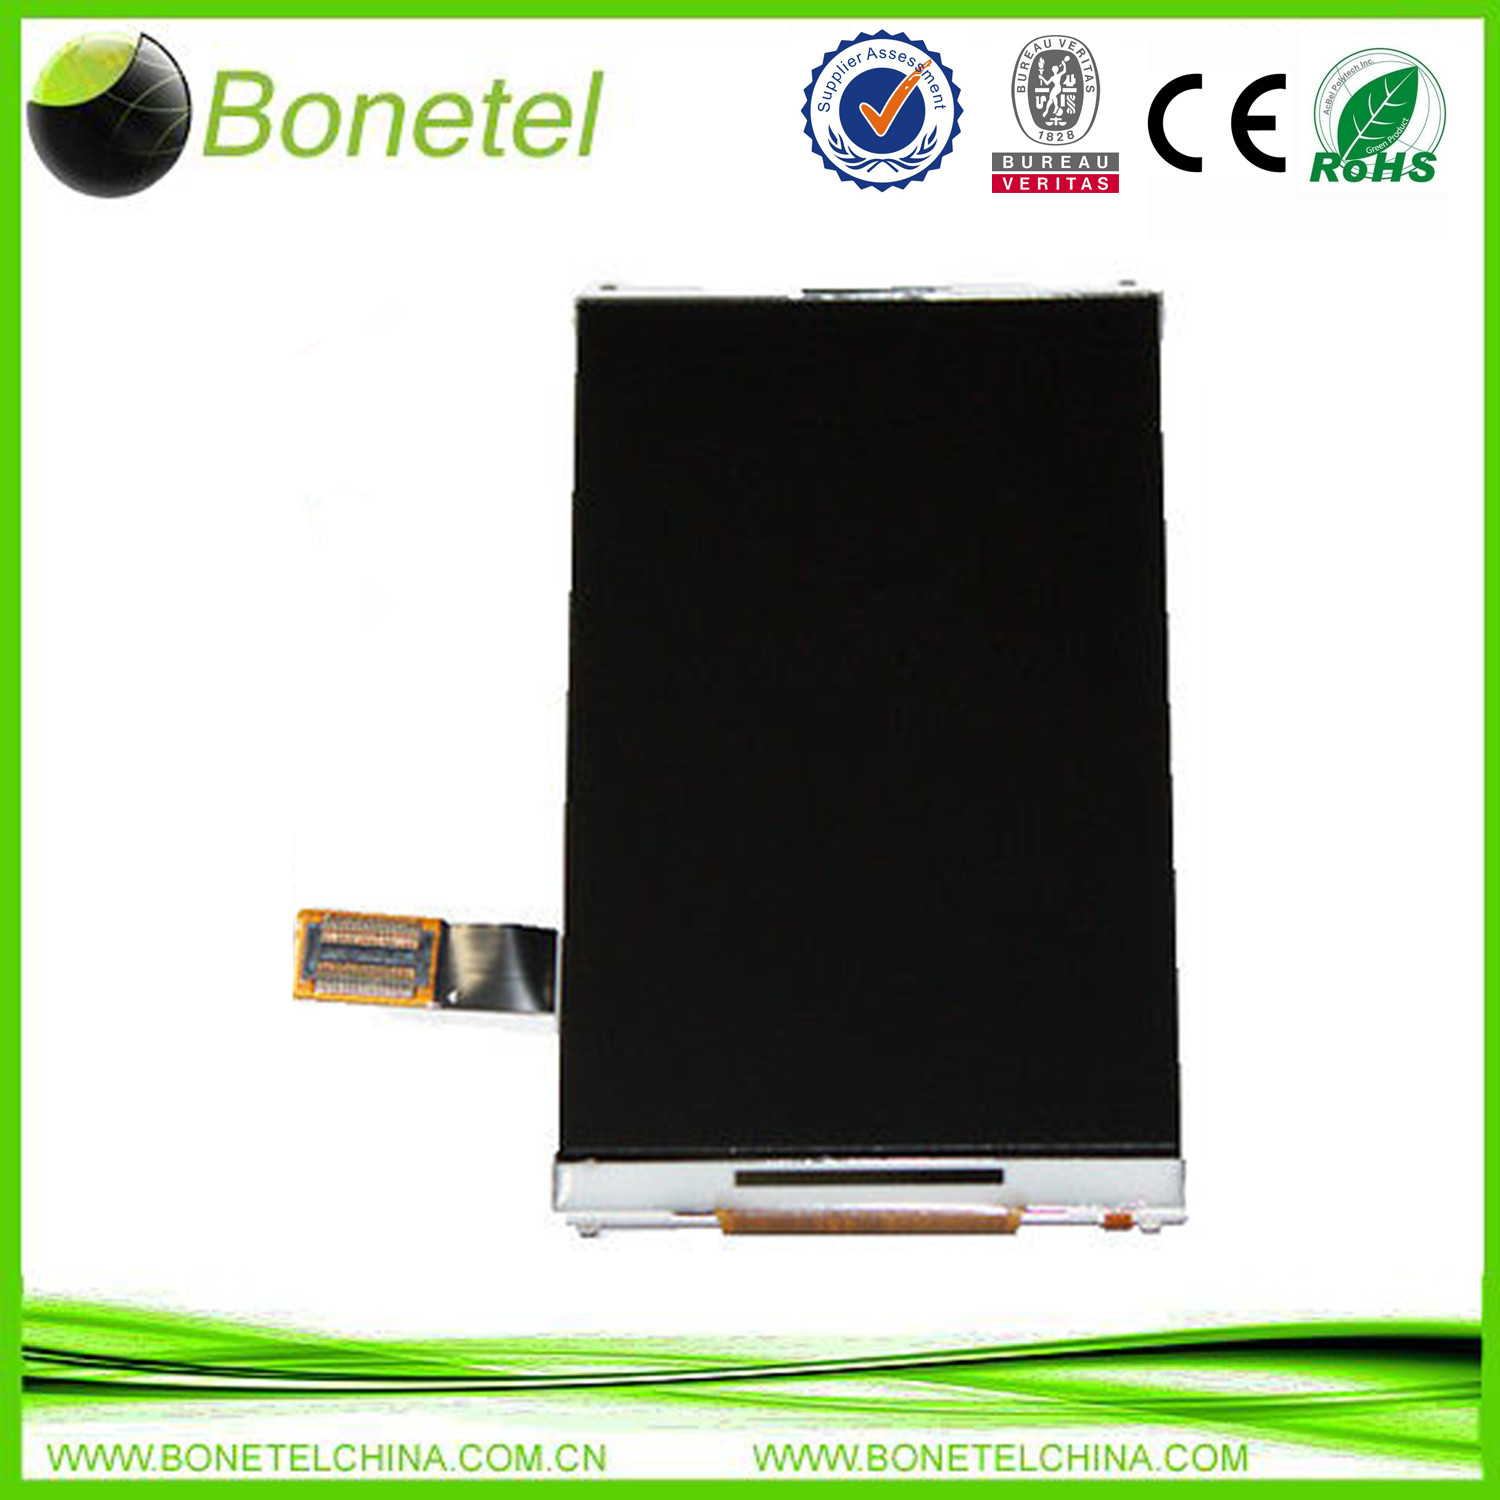 LCD DISPLAY PER SAMSUNG S5560